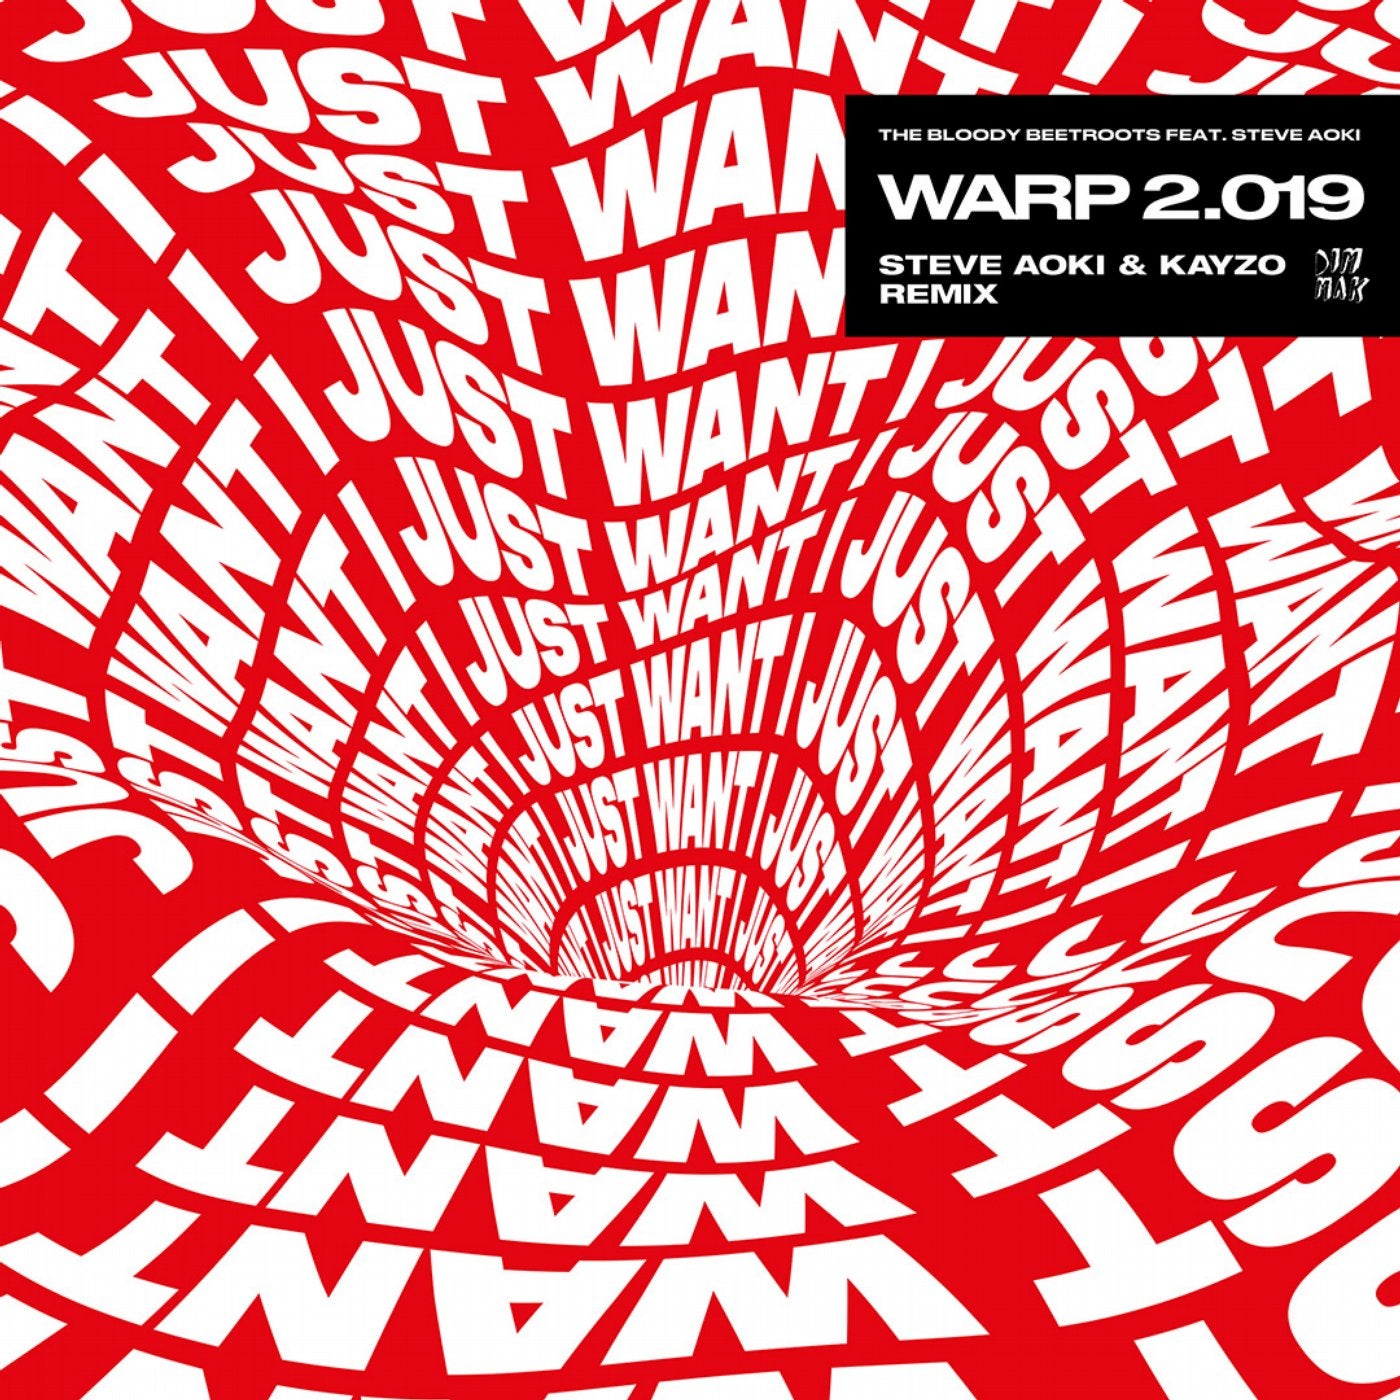 Warp 2.019 (feat. Steve Aoki) [Steve Aoki & Kayzo Remix]